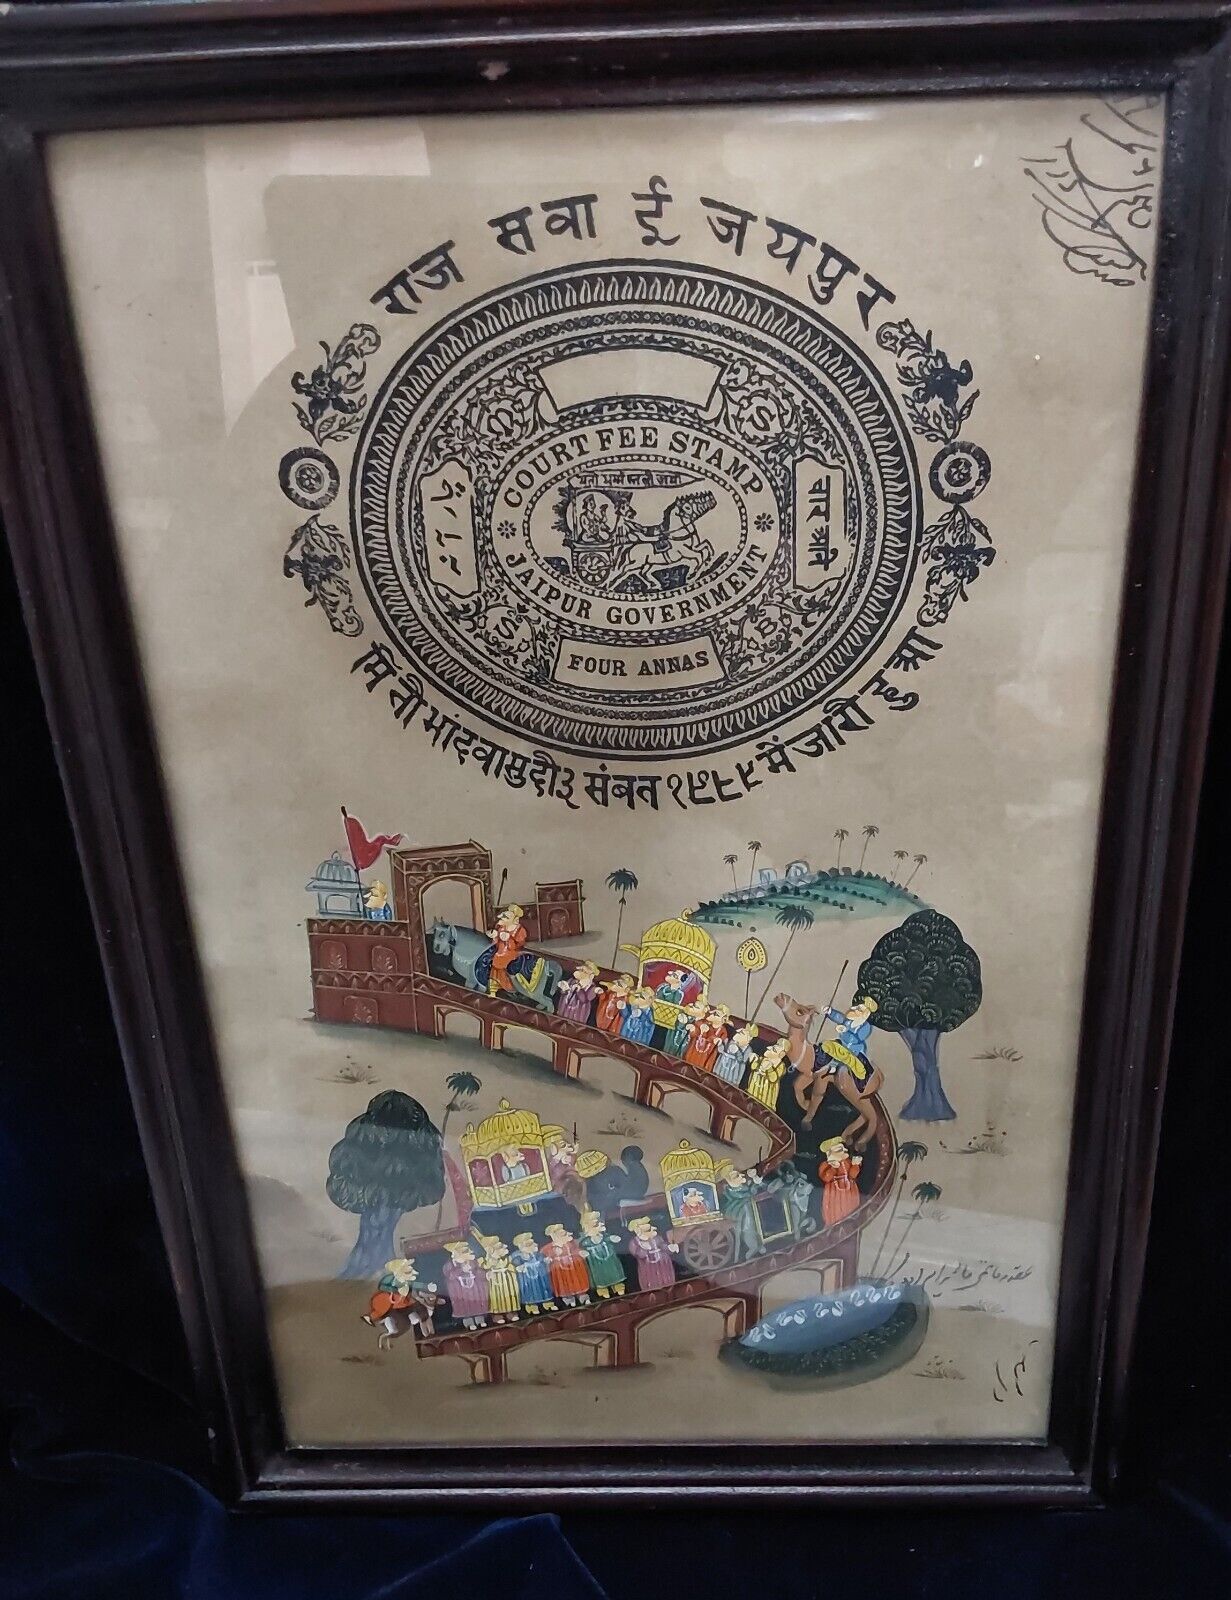 SARITA HANDA - Framed Painting Jaipur Government Court Fee Stamp Paper India